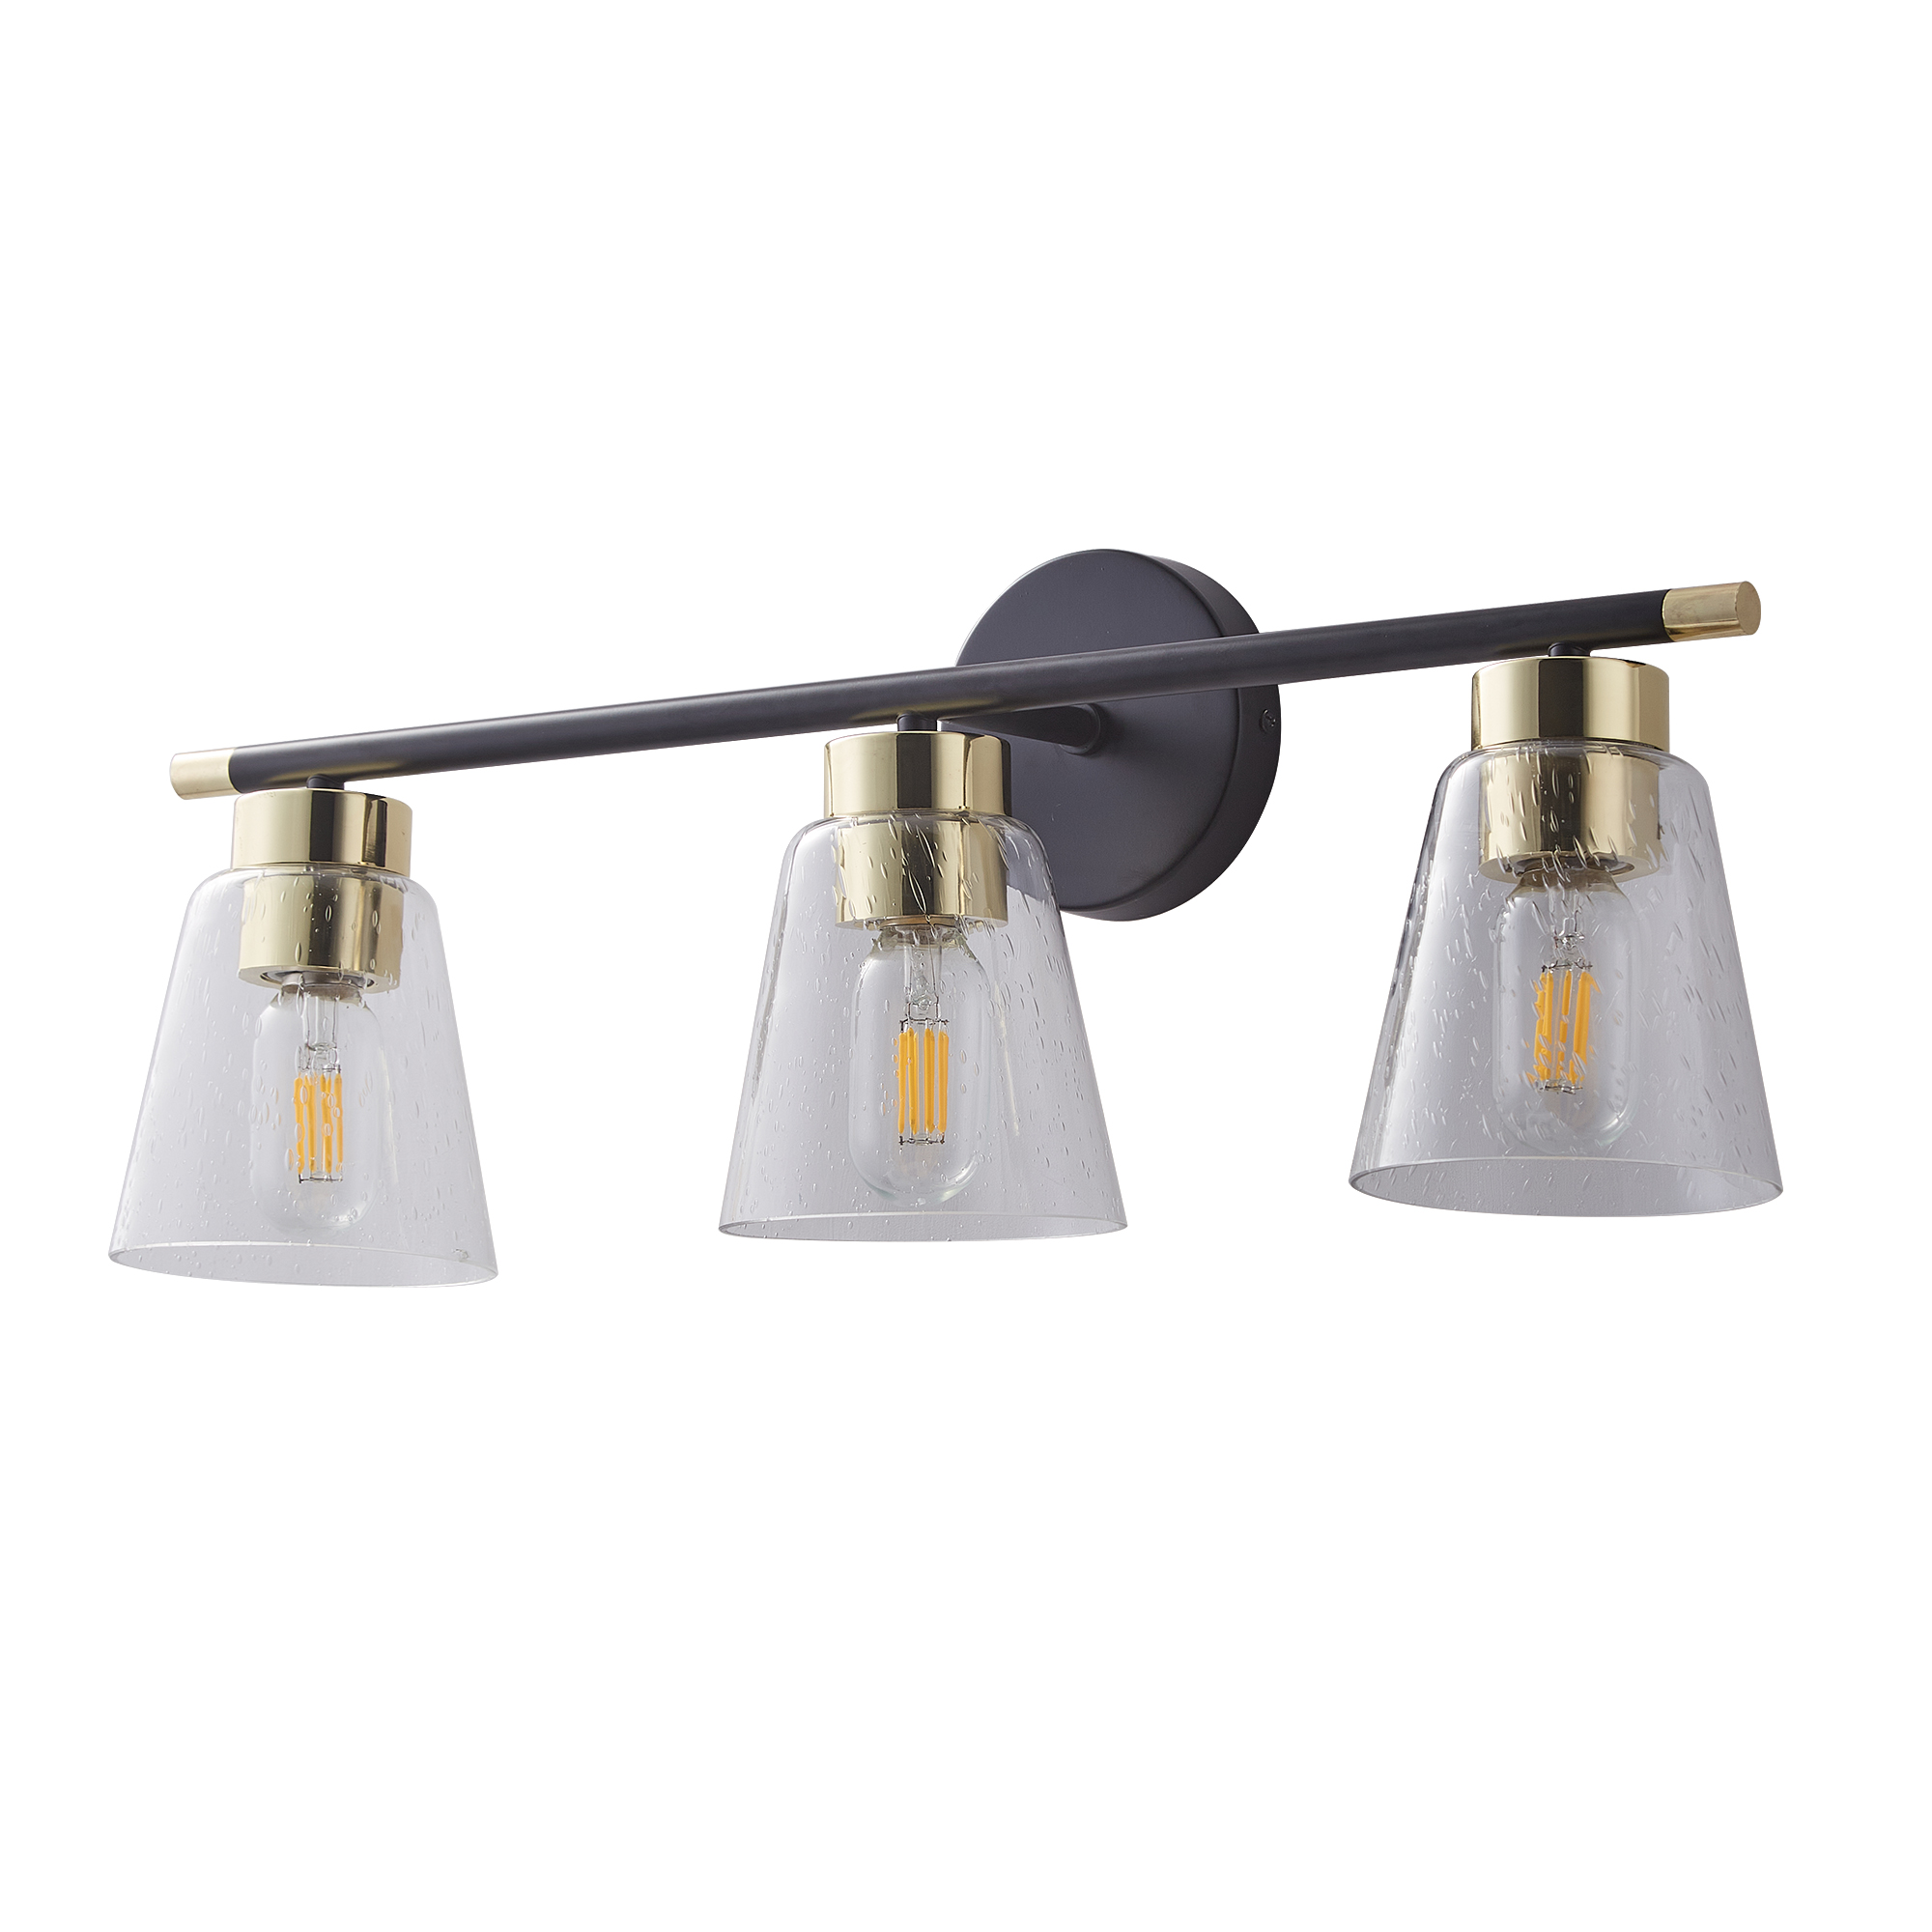 LANTRO JS -Vanity lamp bathroom lamp mirror lighting matte black brushed gold glass lampshade wall lamp wall lamp lamp 3 lamps（Without bulb） - image 1 of 9